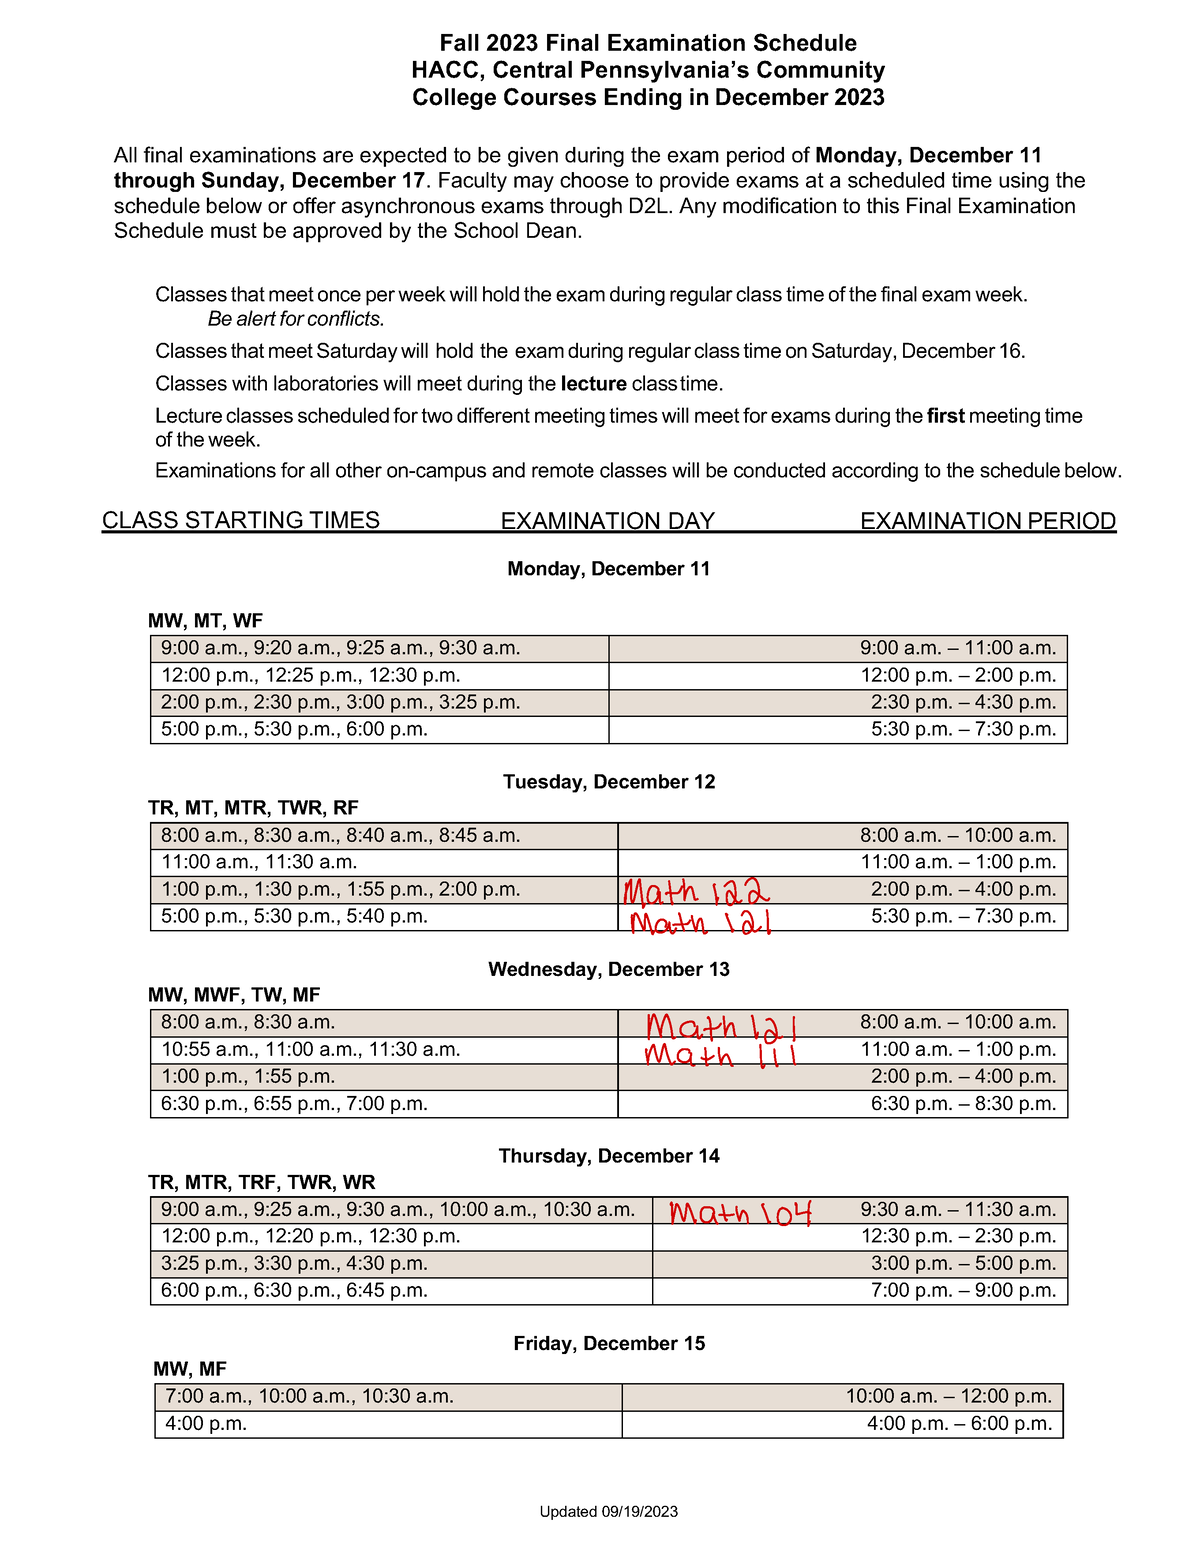 Fall 2023 Final Exam Schedule Fall 2023 Final Examination Schedule